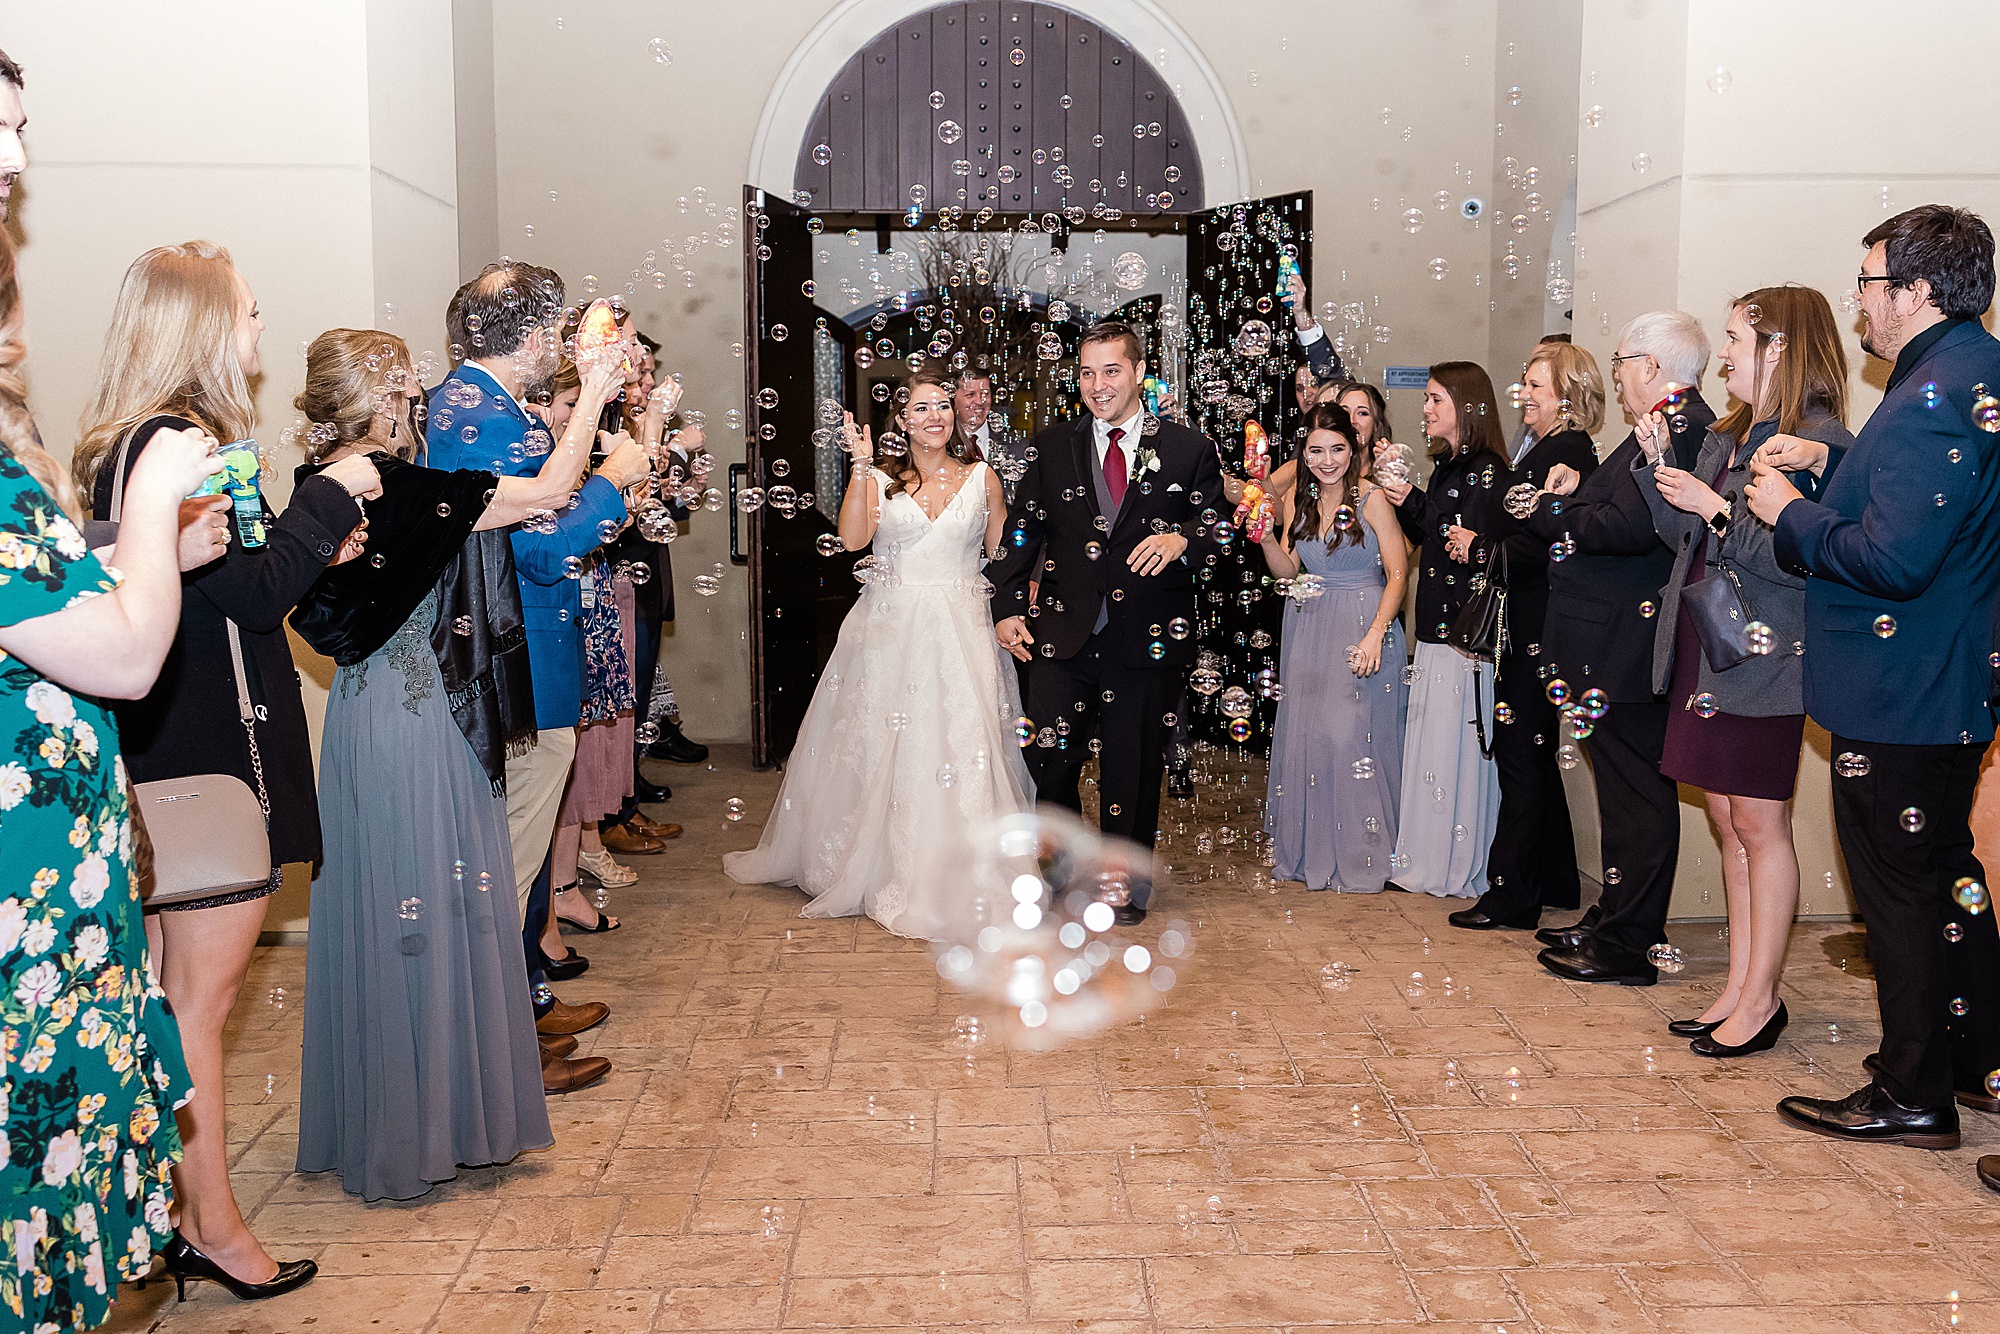 bubble exit from Chapel at Ana Villa wedding 